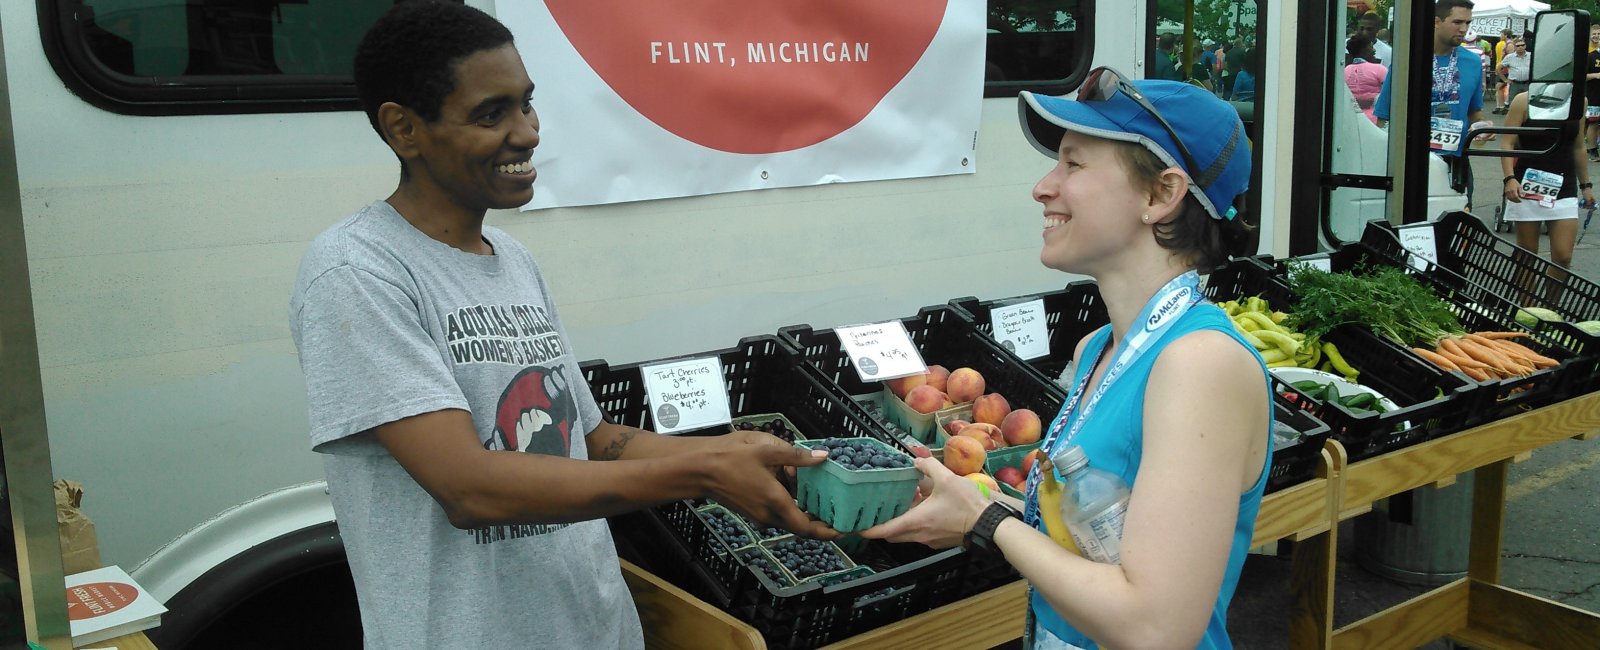 Flint Fresh Mobile Market, purchasing blue berries